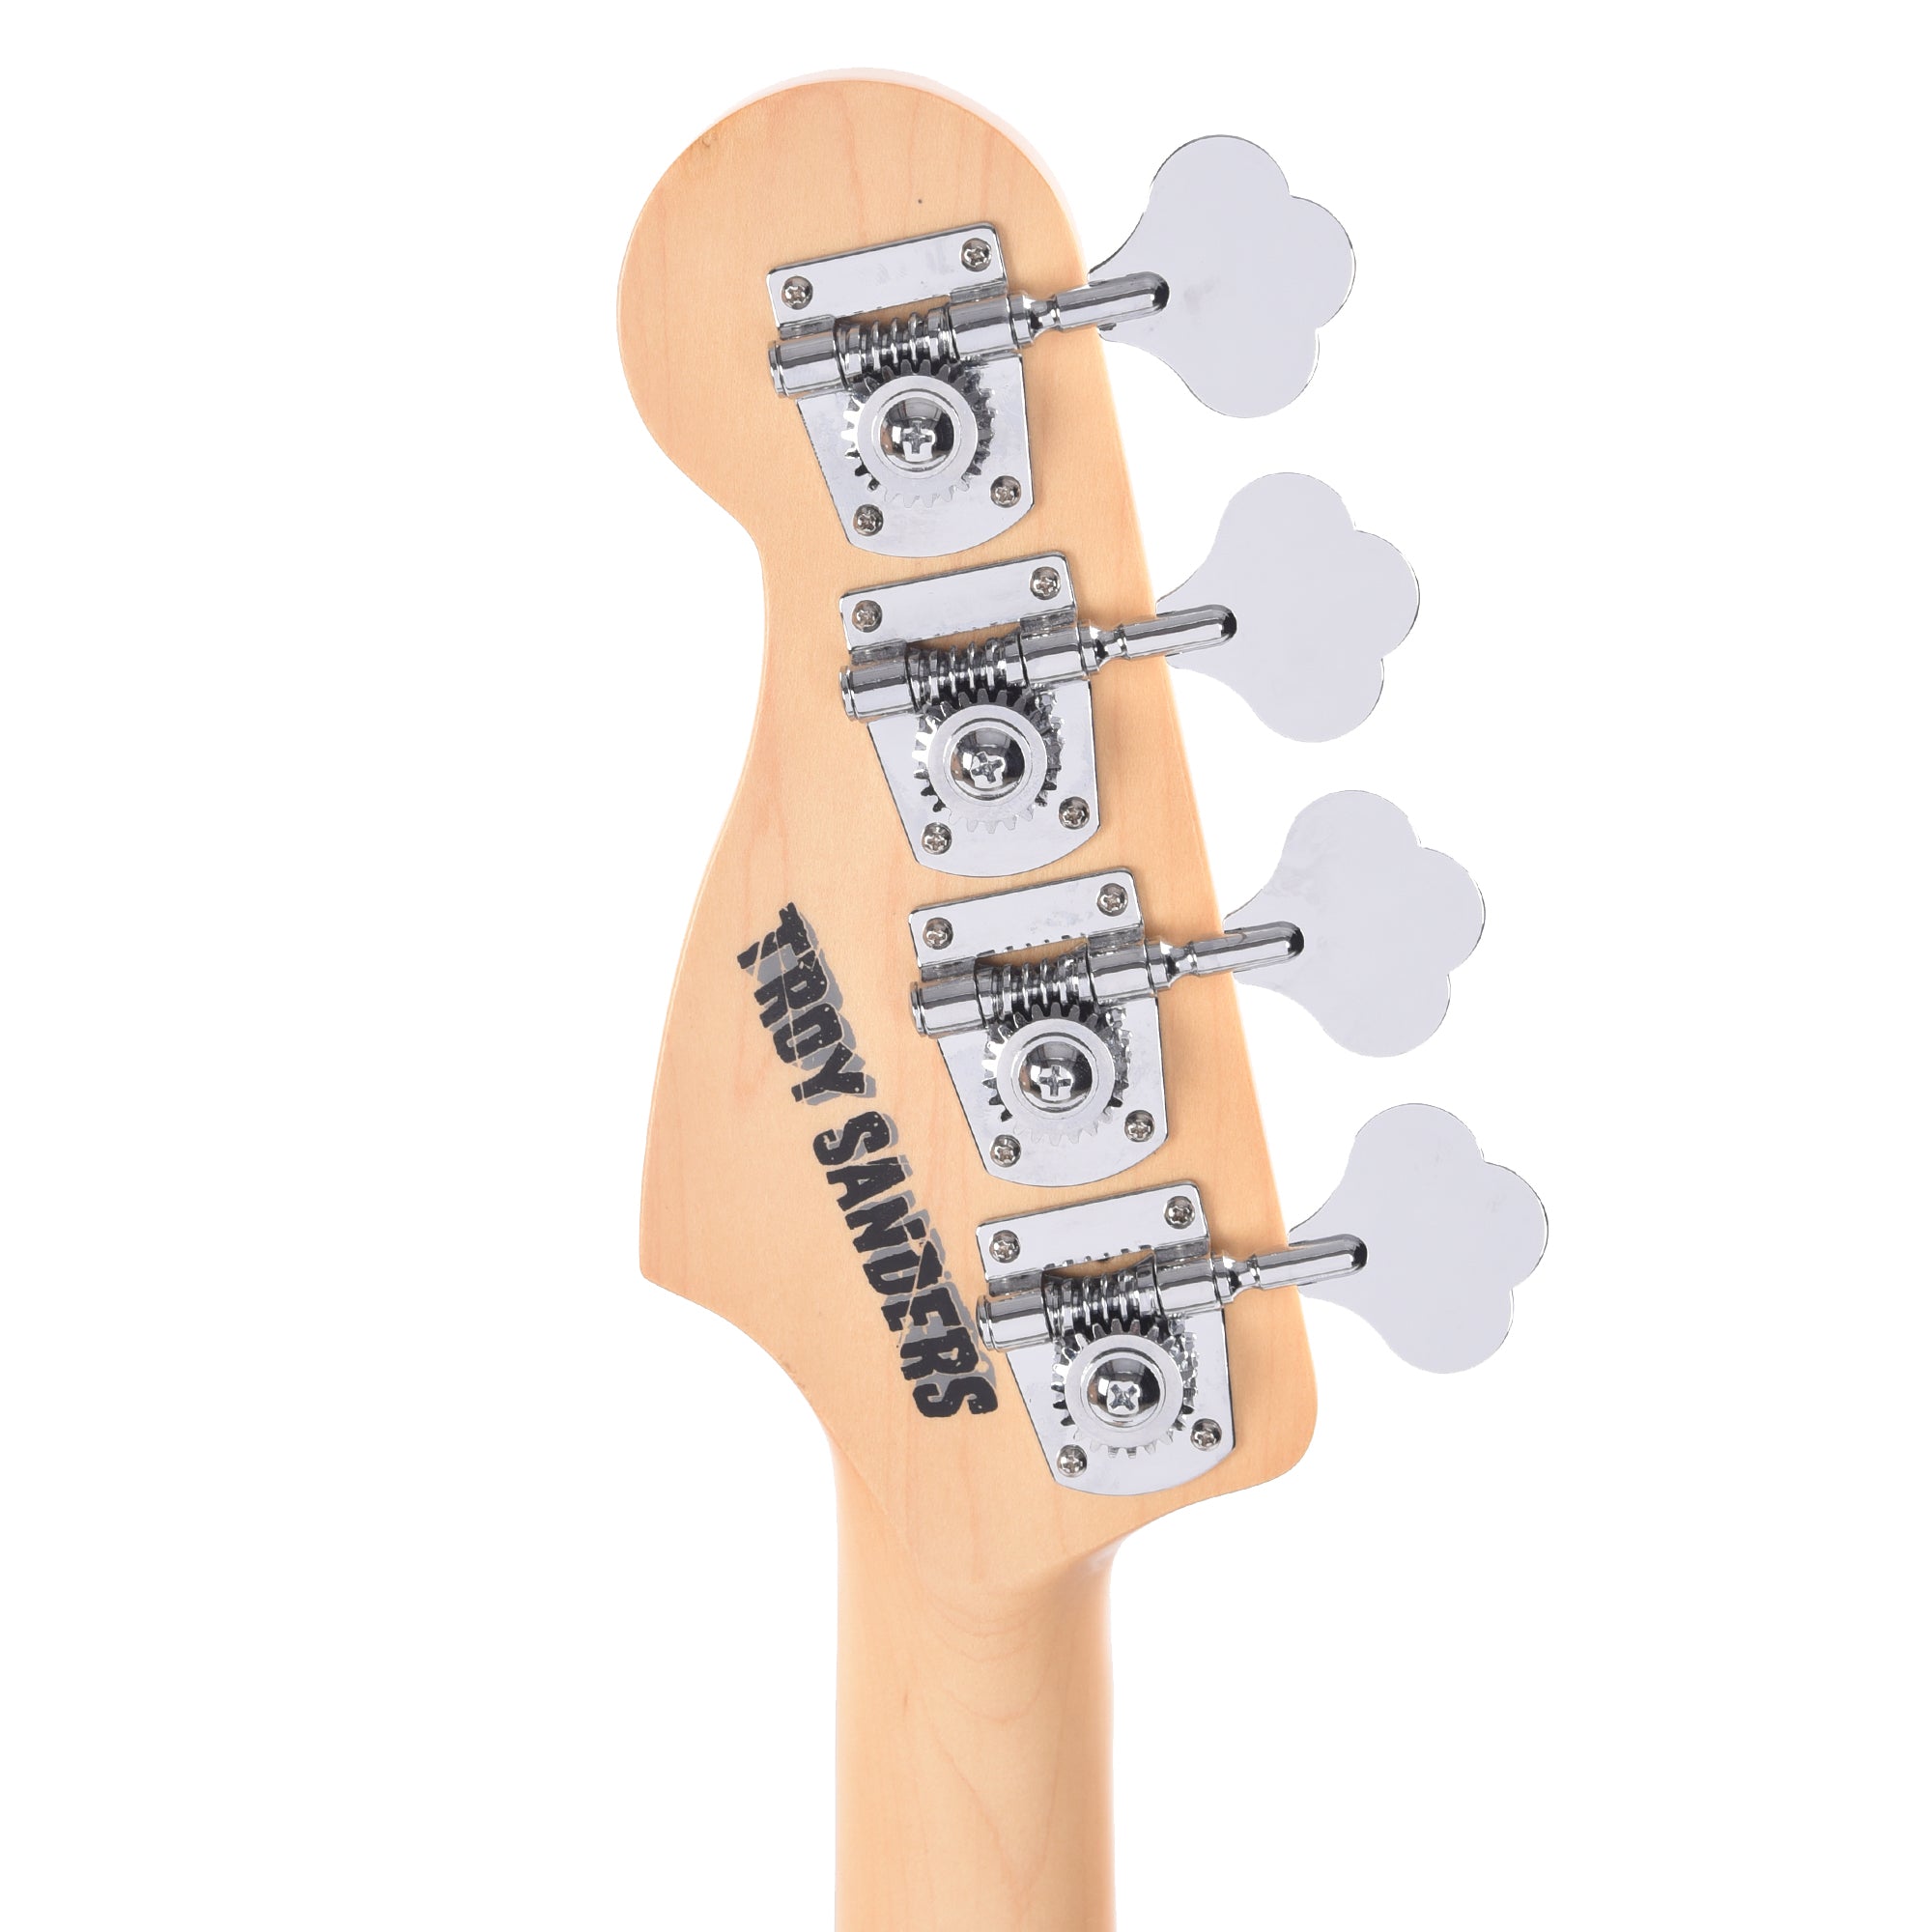 Fender Artist Troy Sanders Precision Bass Silverburst